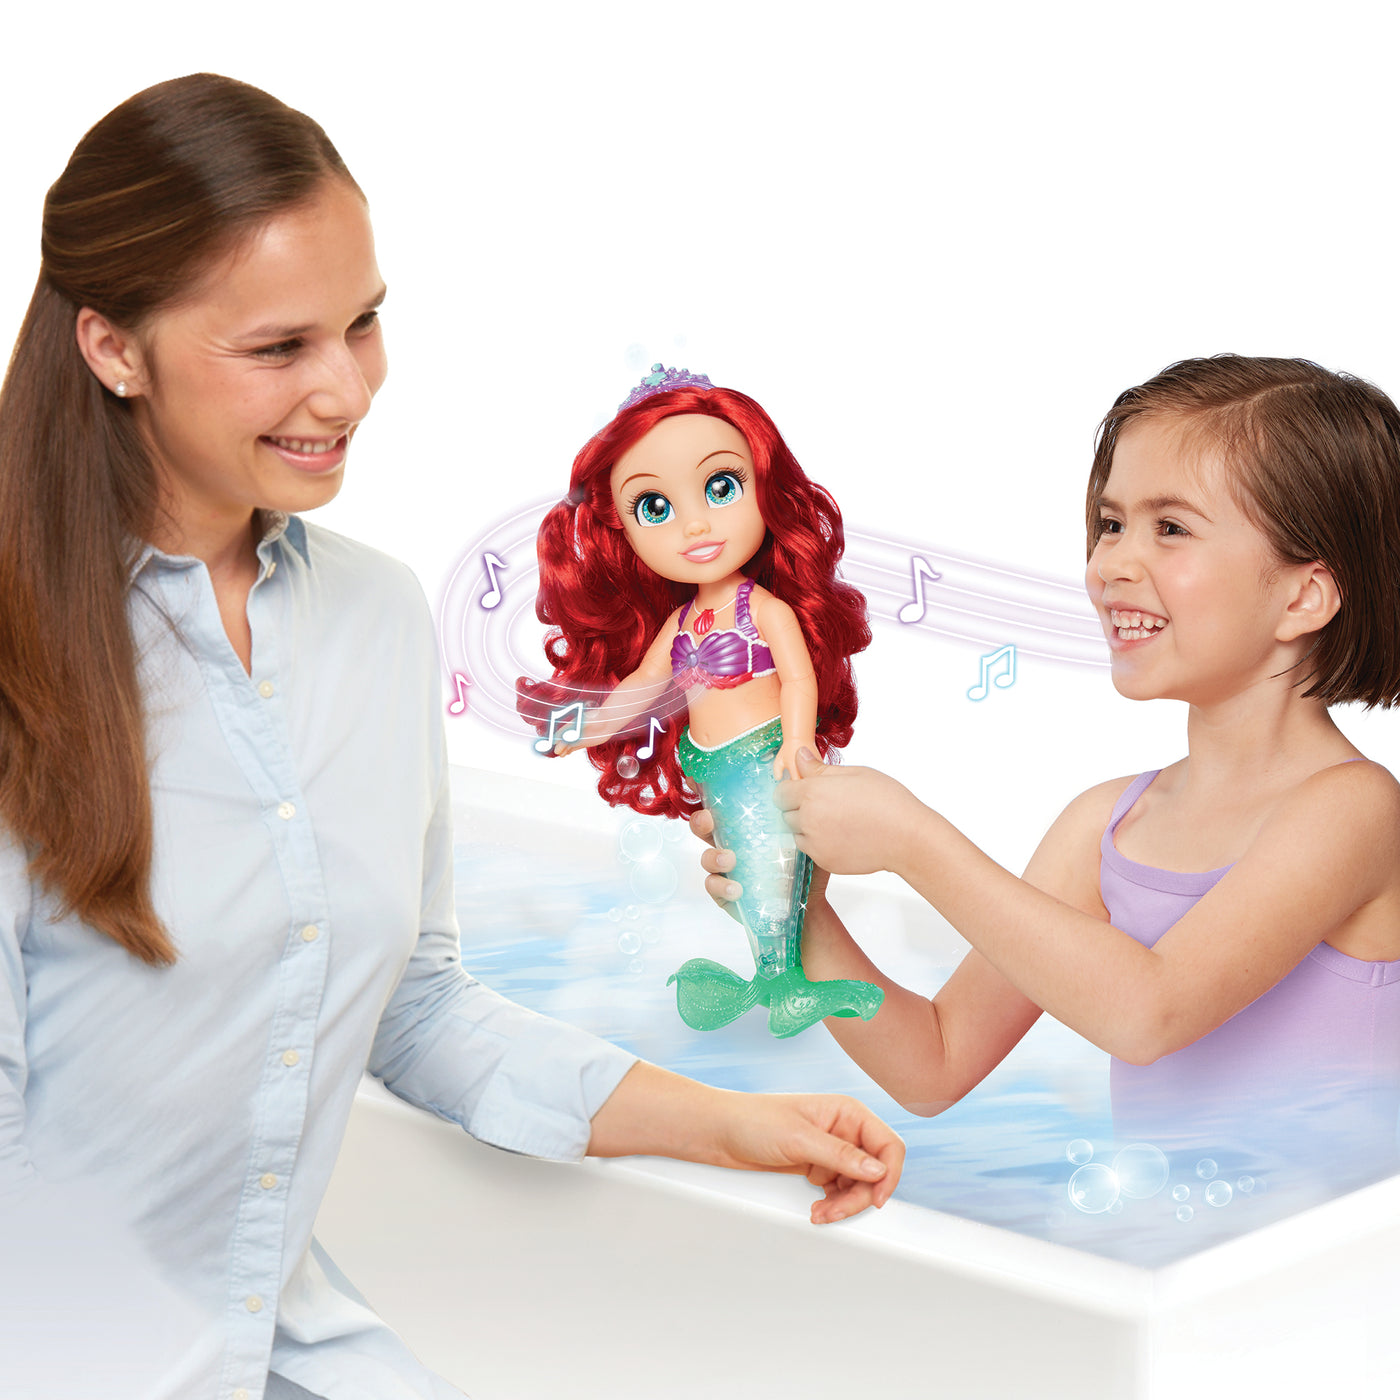 Disney Princess Sing and Sparkle Ariel